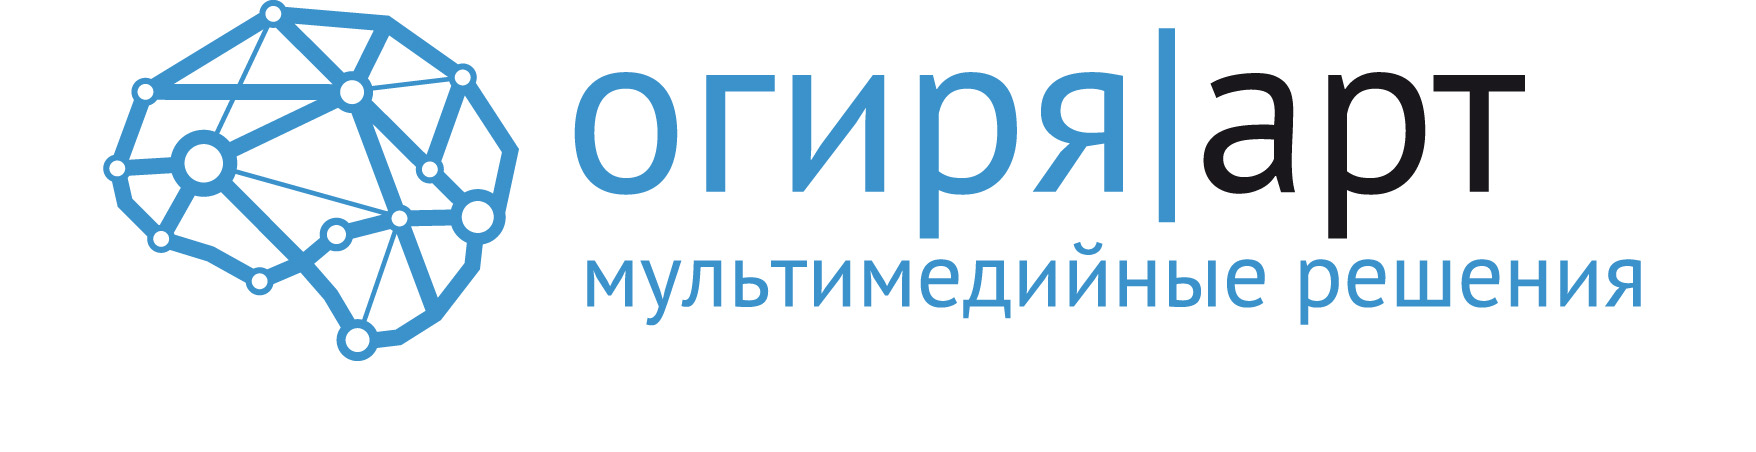 OgiryaArt logo outlines